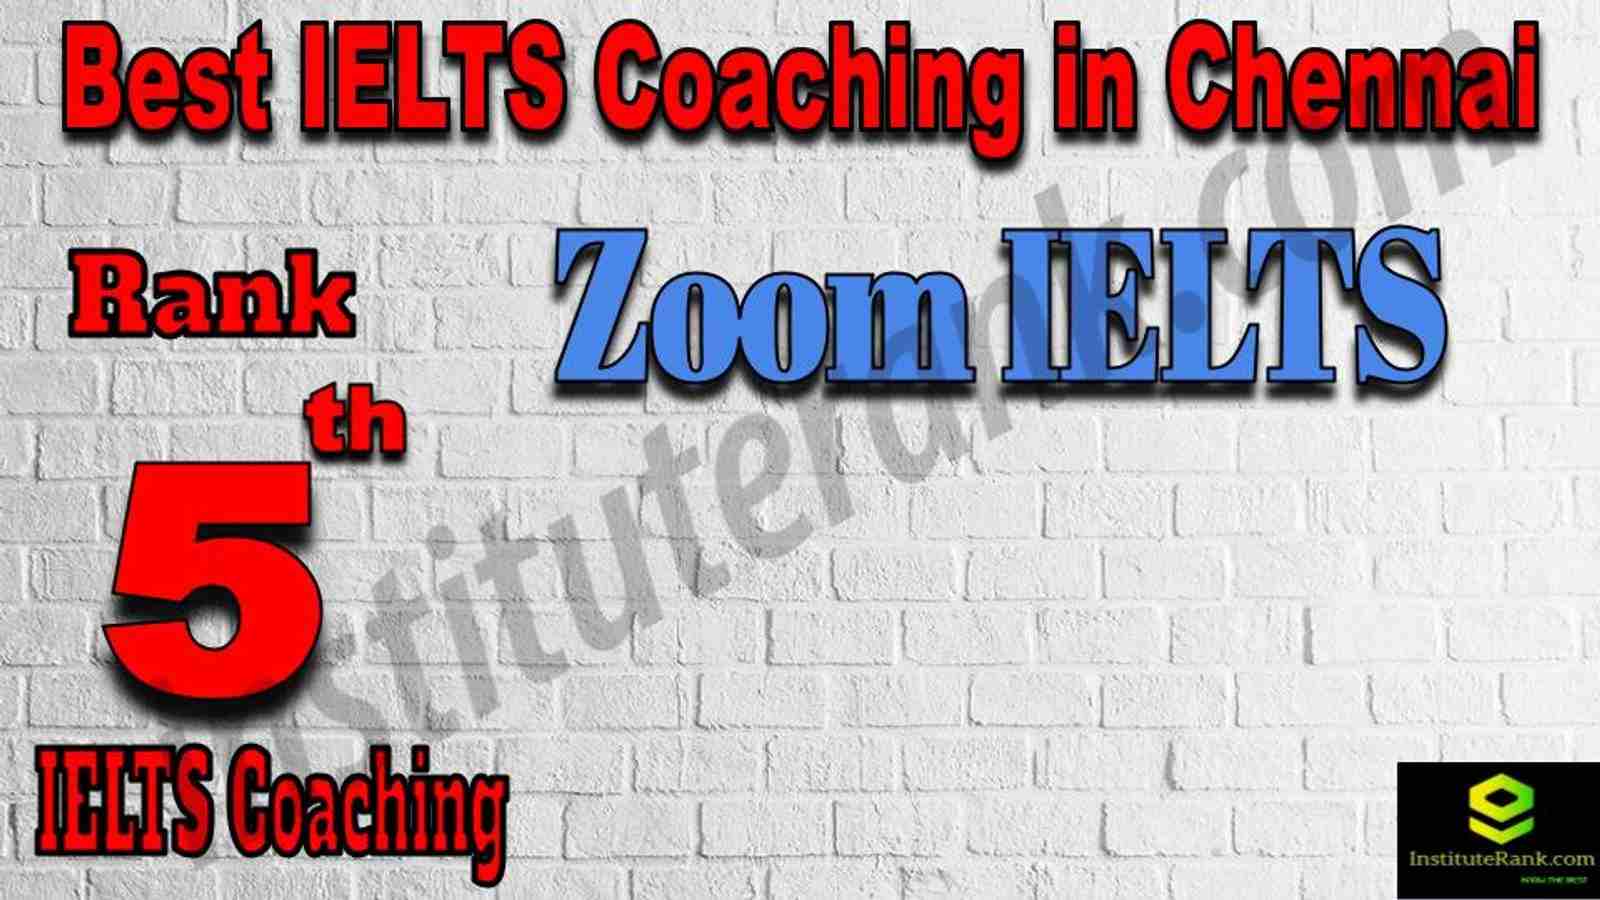 5th Best IELTS Coaching in Chennai